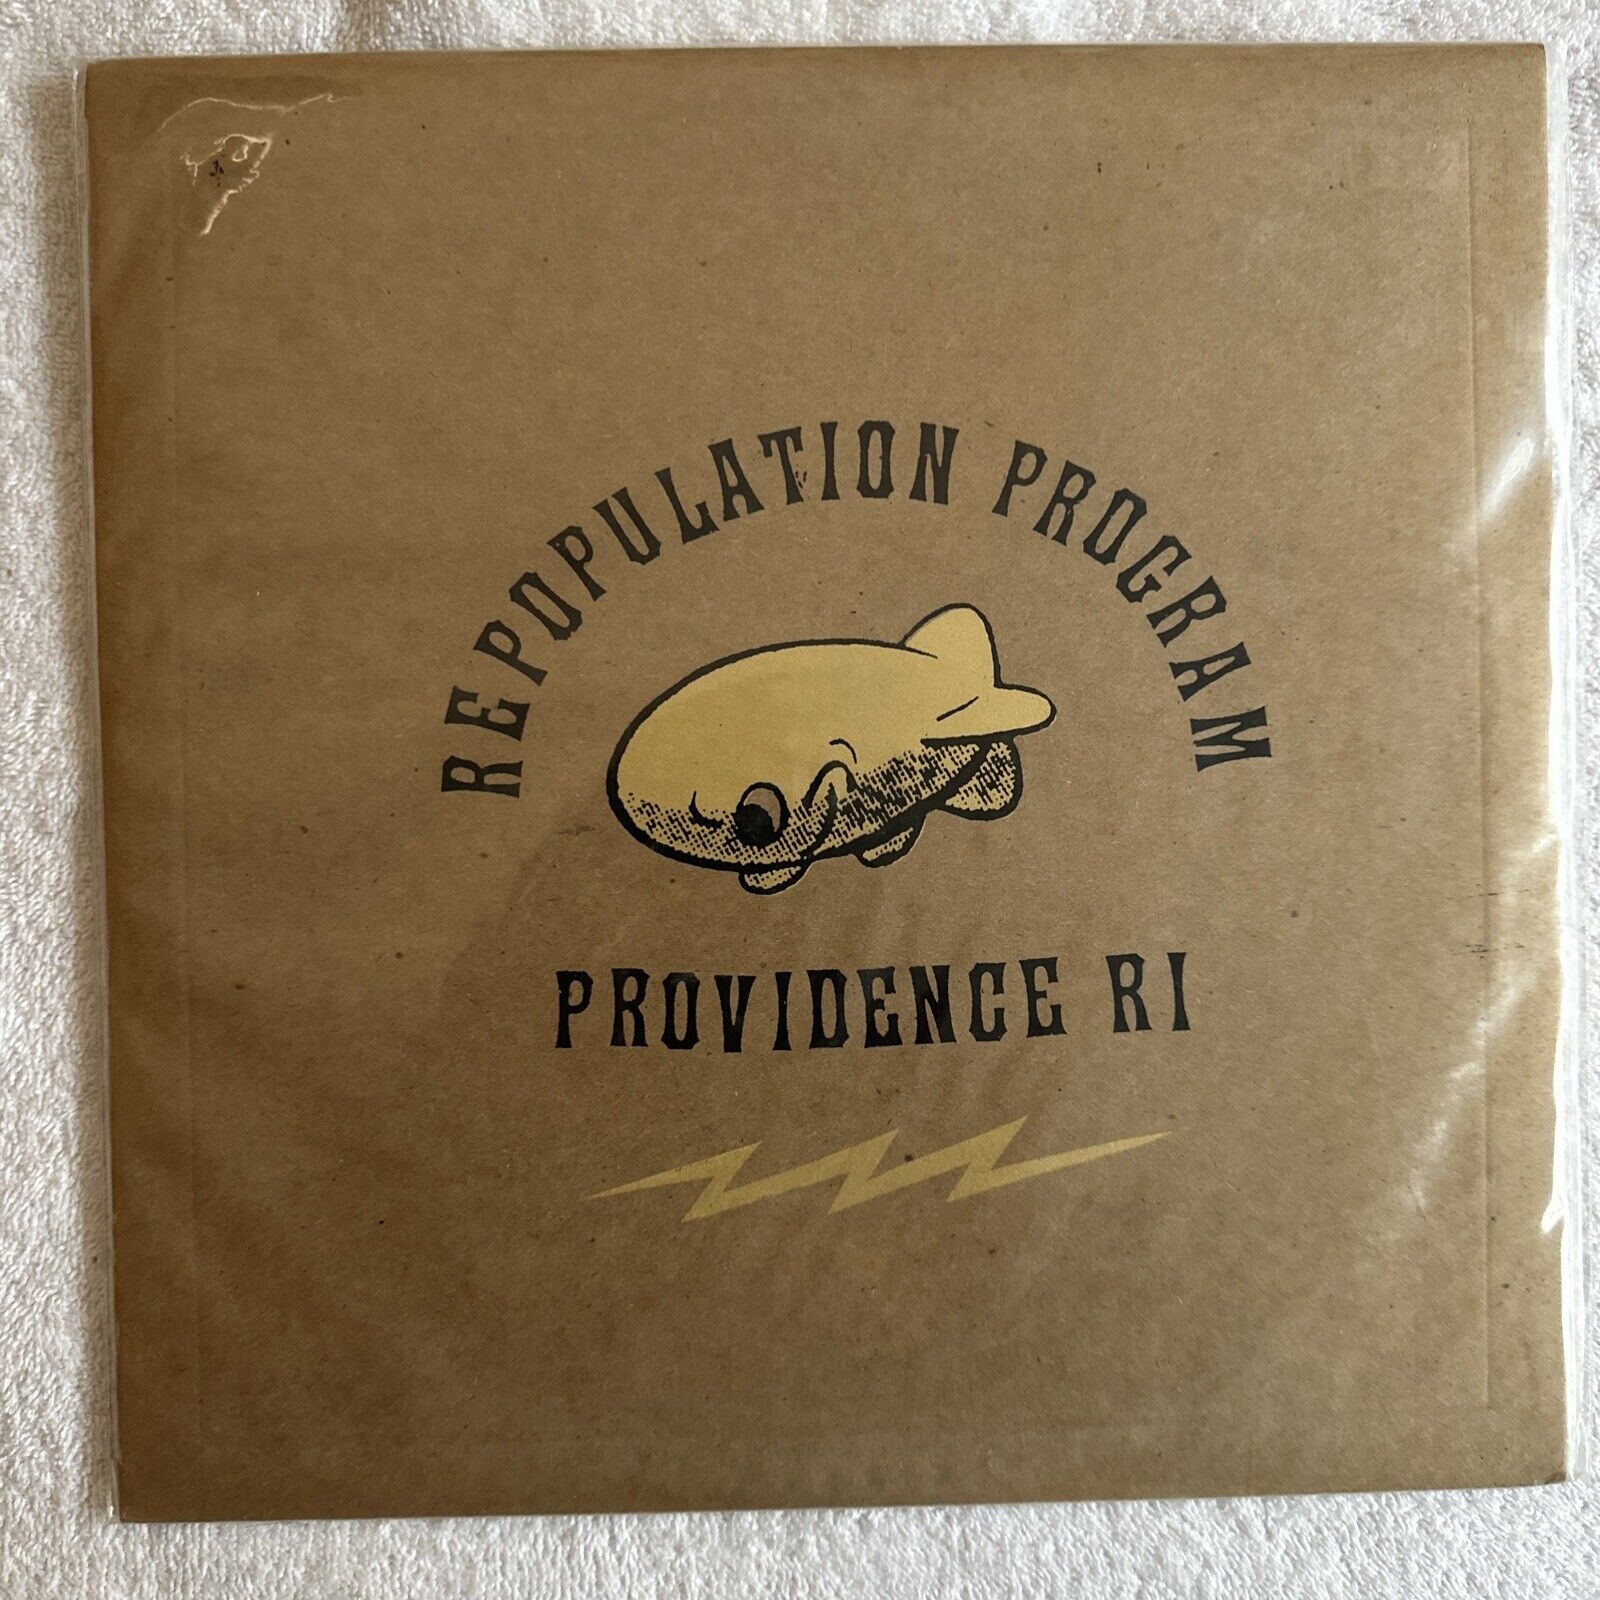 Lightning Bolt and Others Repopulation Program Load Records Vinyl LP Record